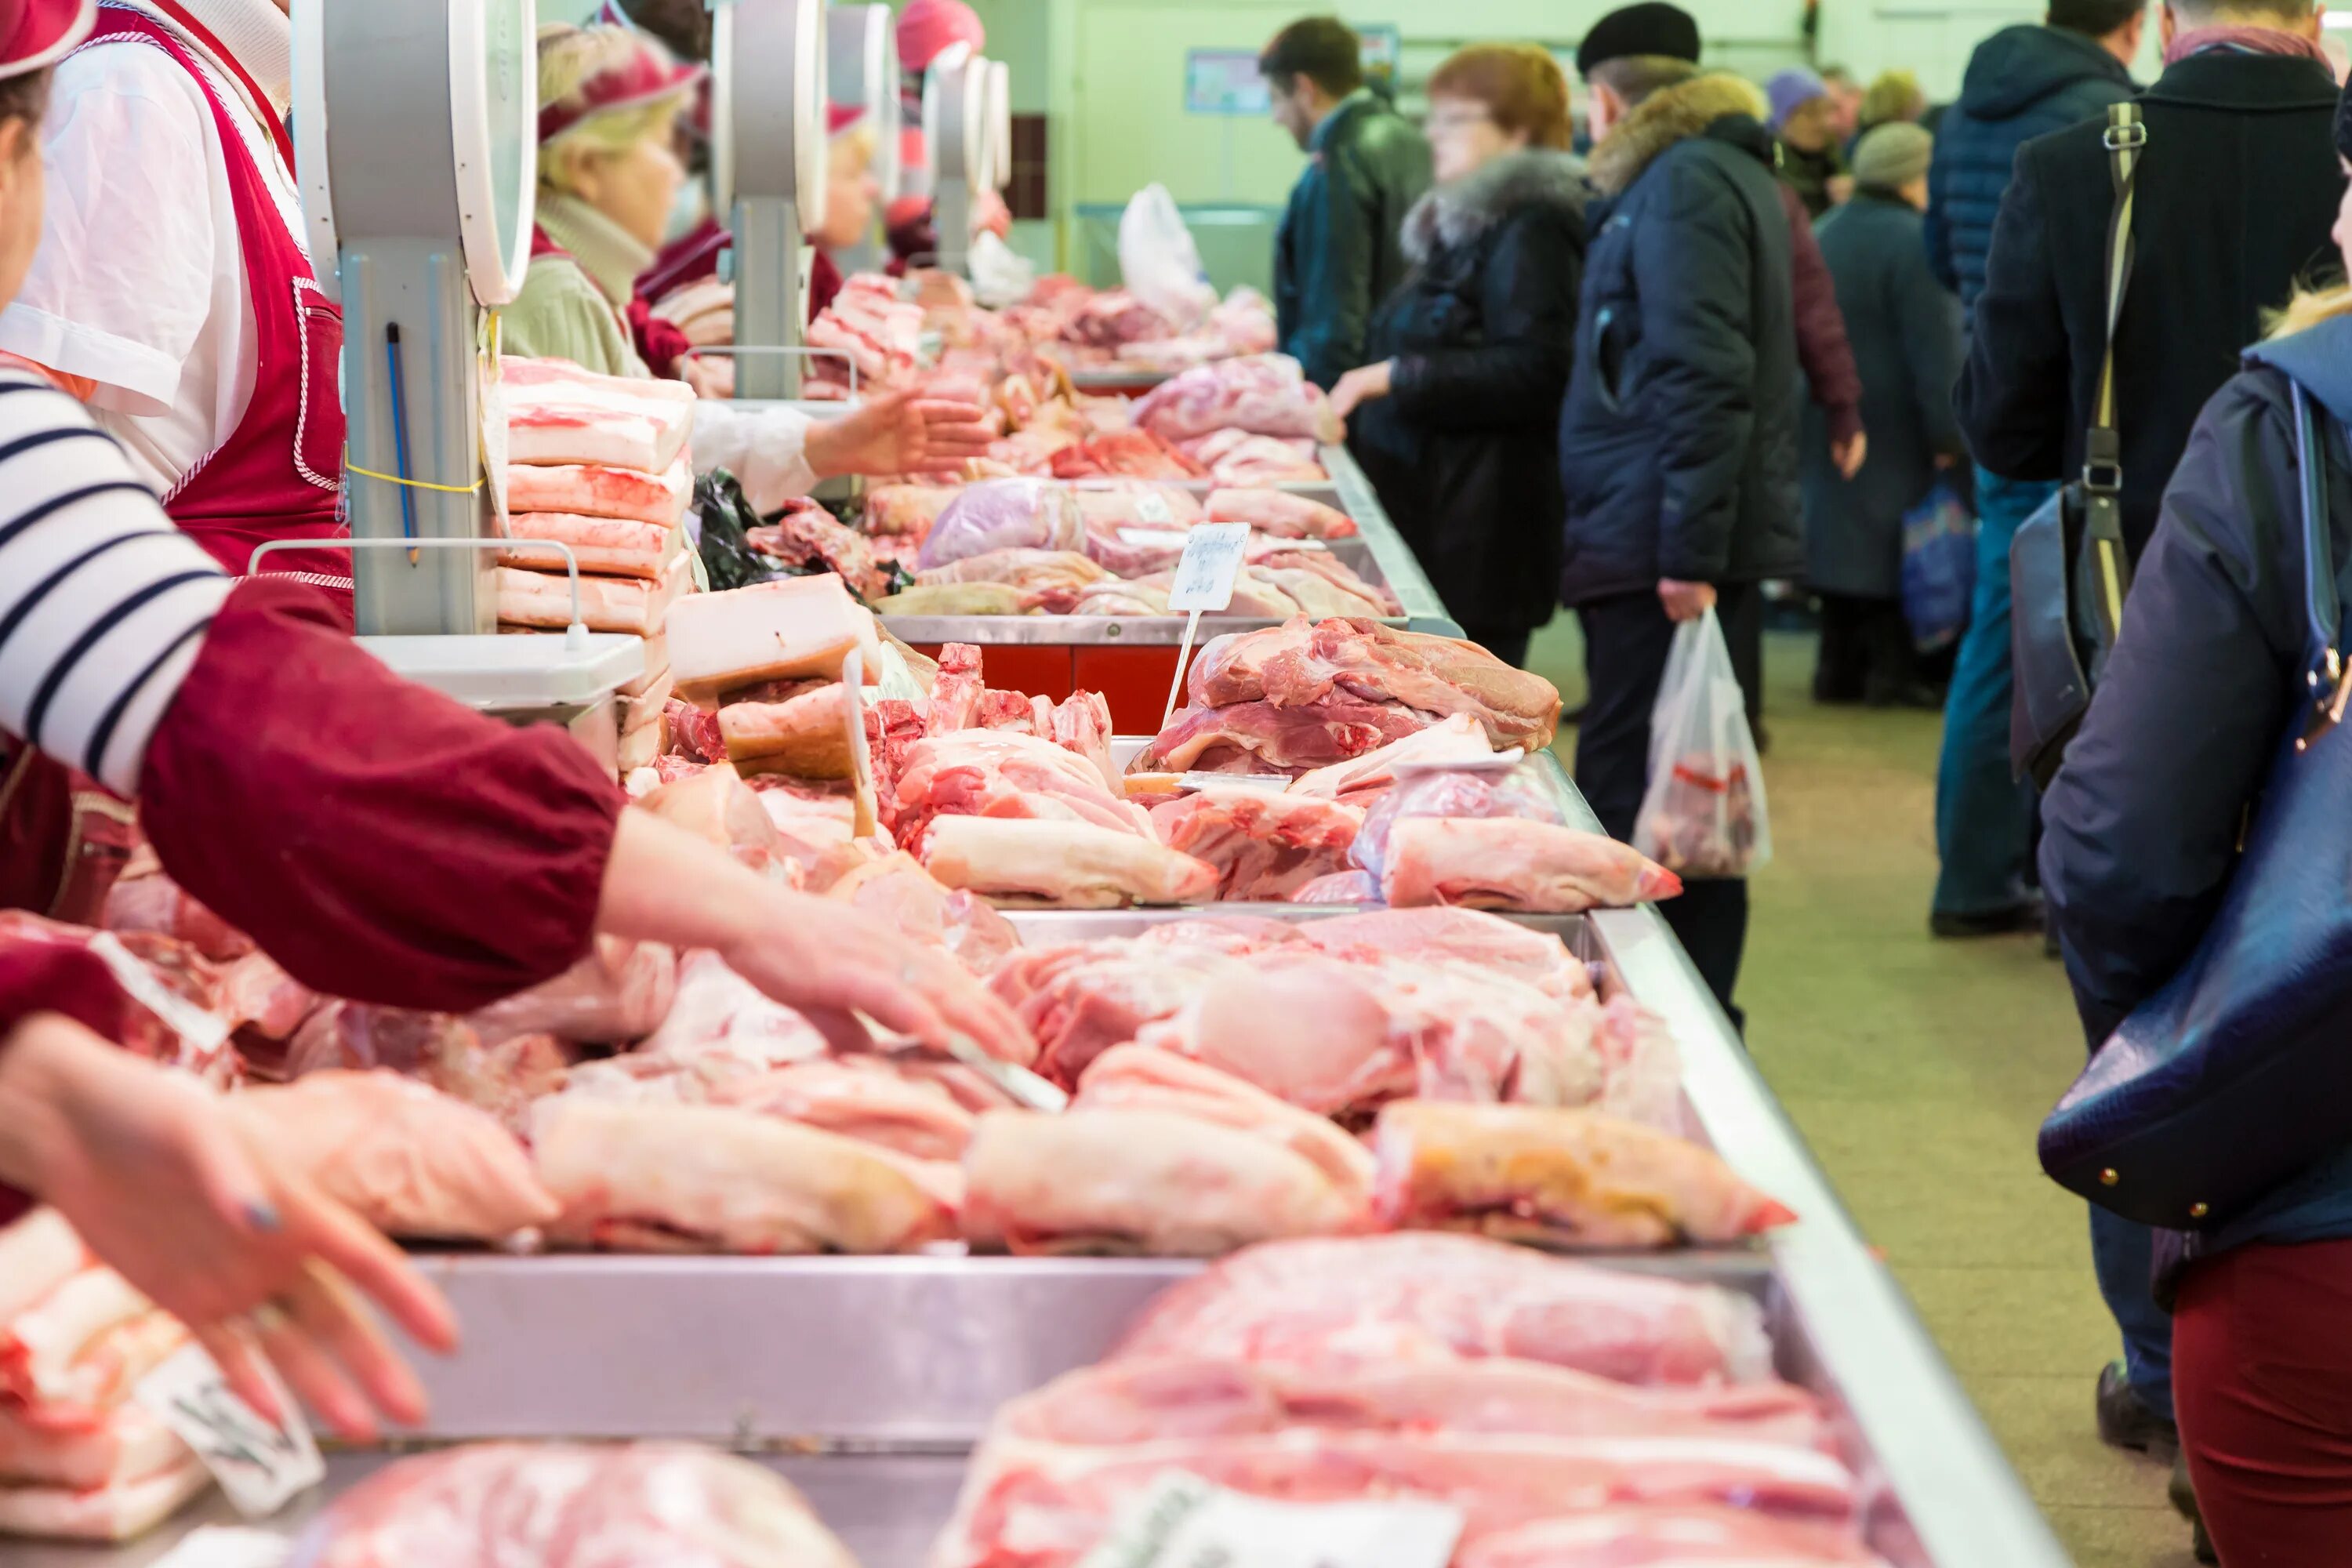 На рынке мяса птицы в стране